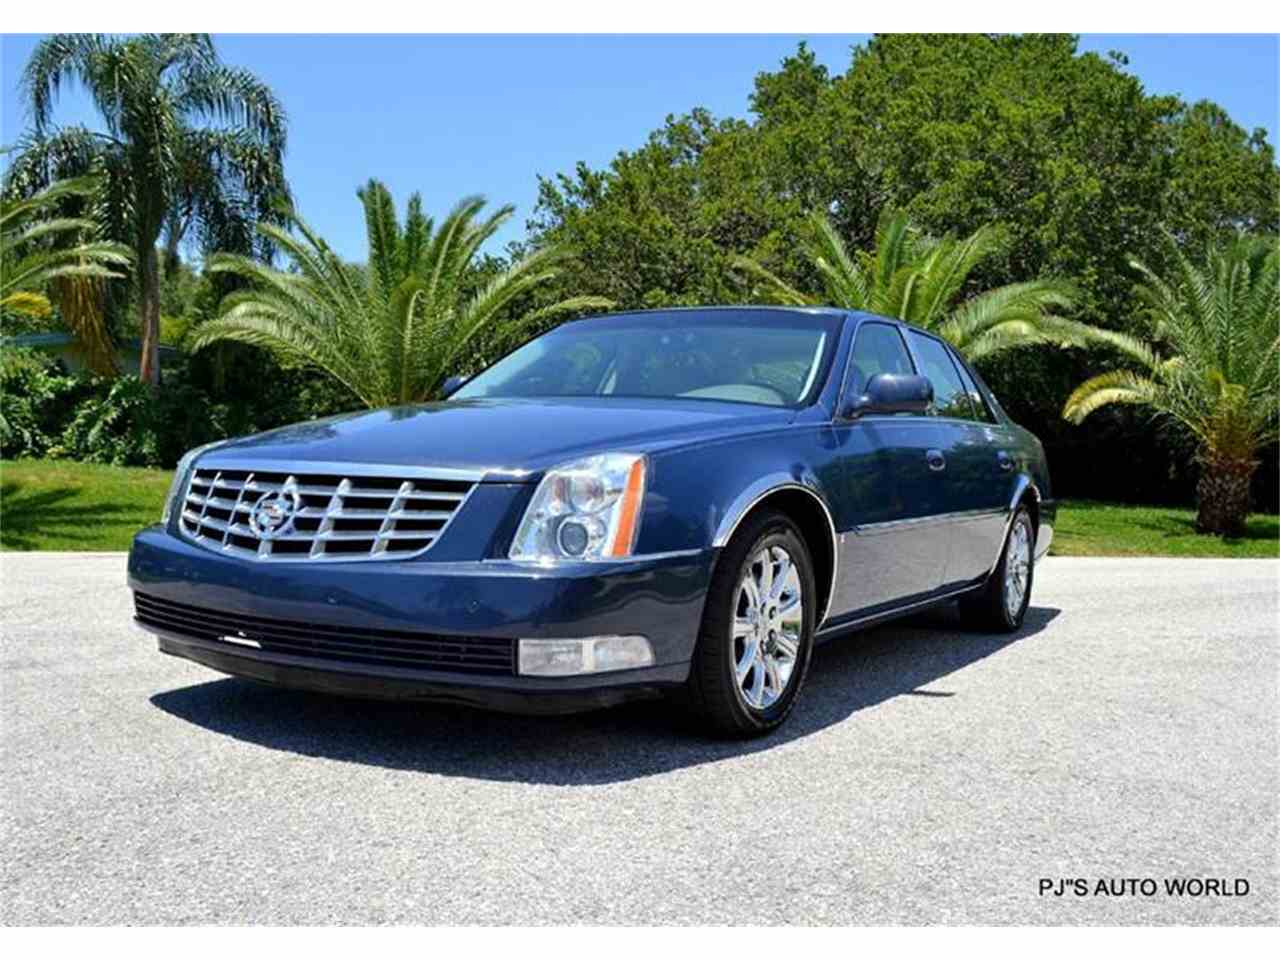 2009 Cadillac DTS for Sale | ClassicCars.com | CC-876109